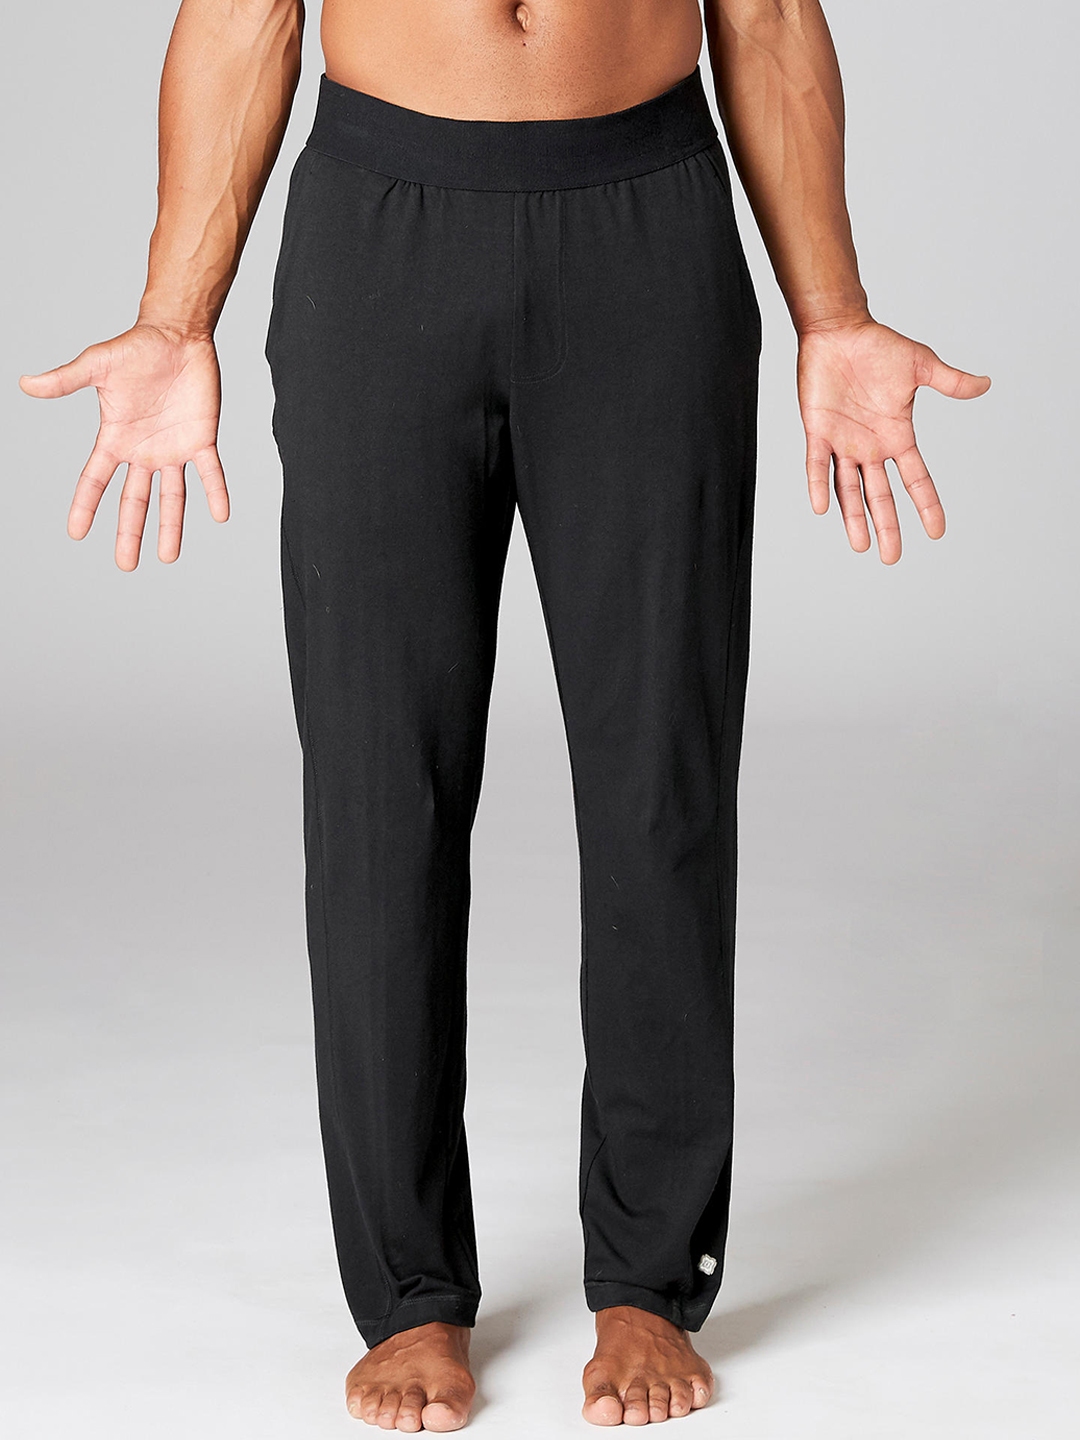 Men's Slim Fit Pants - 500 - Black - Domyos - Decathlon